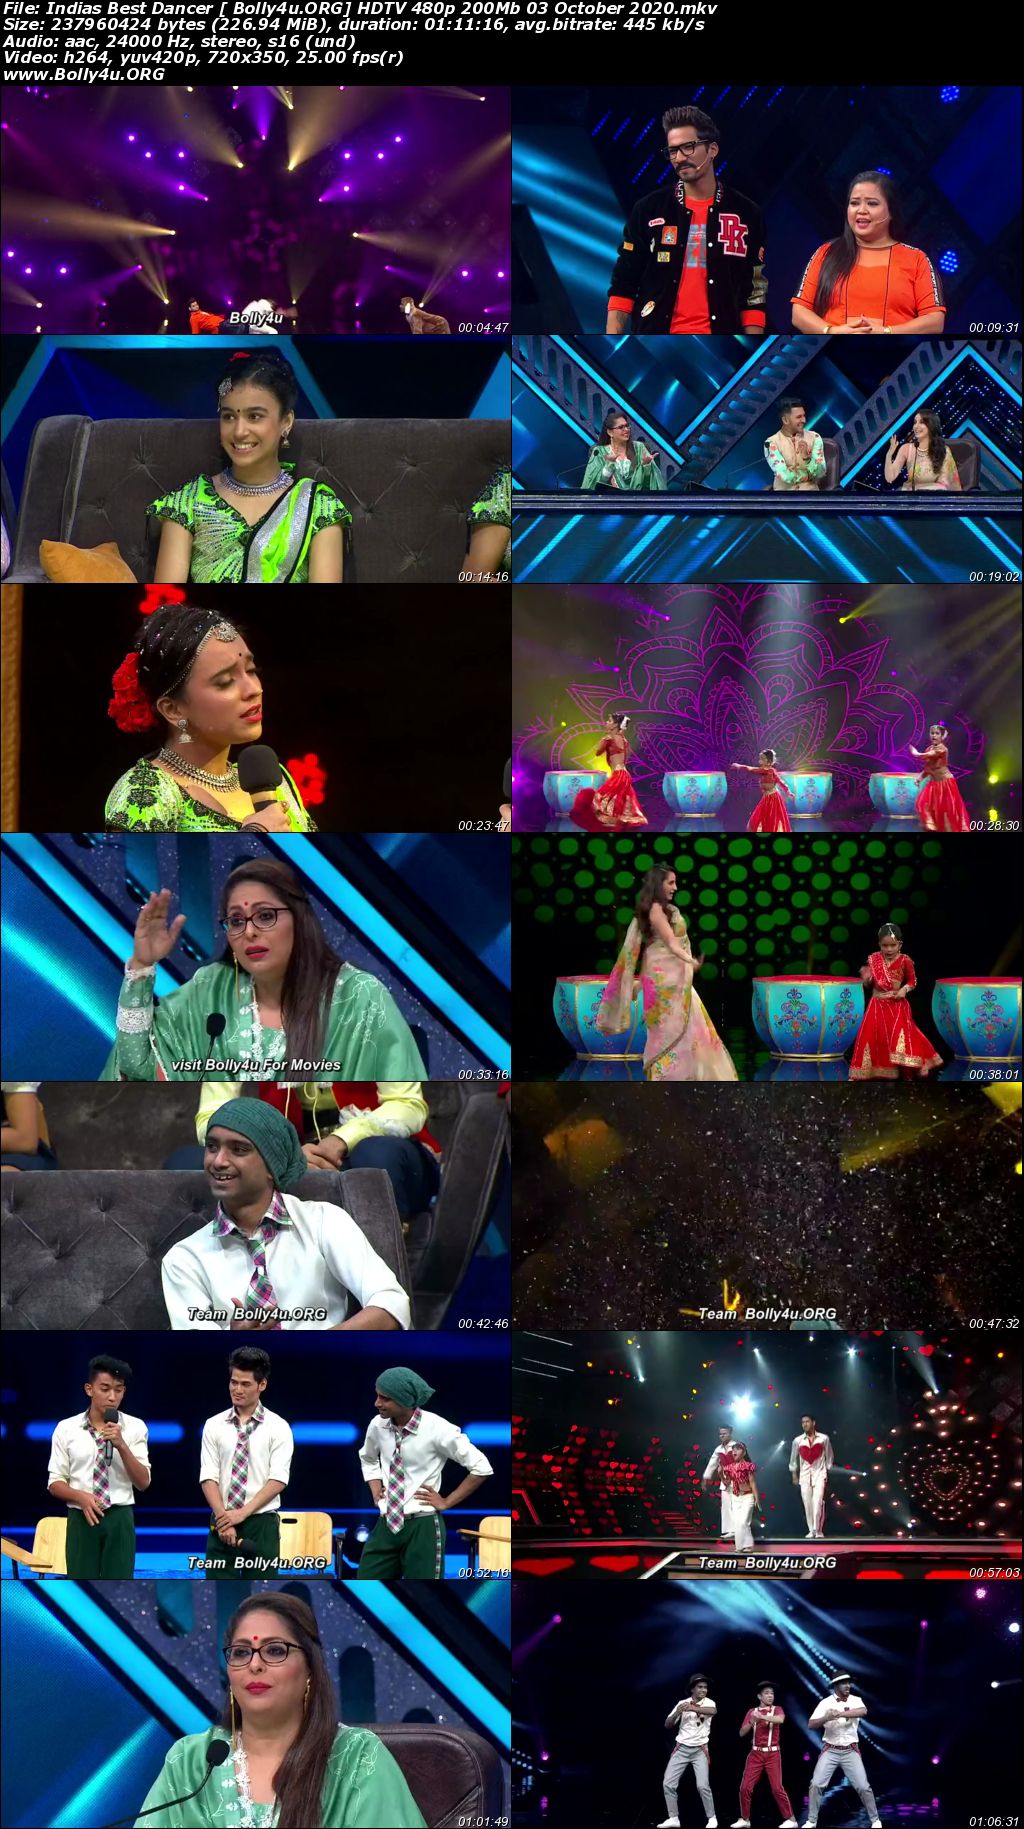 Indias Best Dancer HDTV 480p 200Mb 03 October 2020 Download